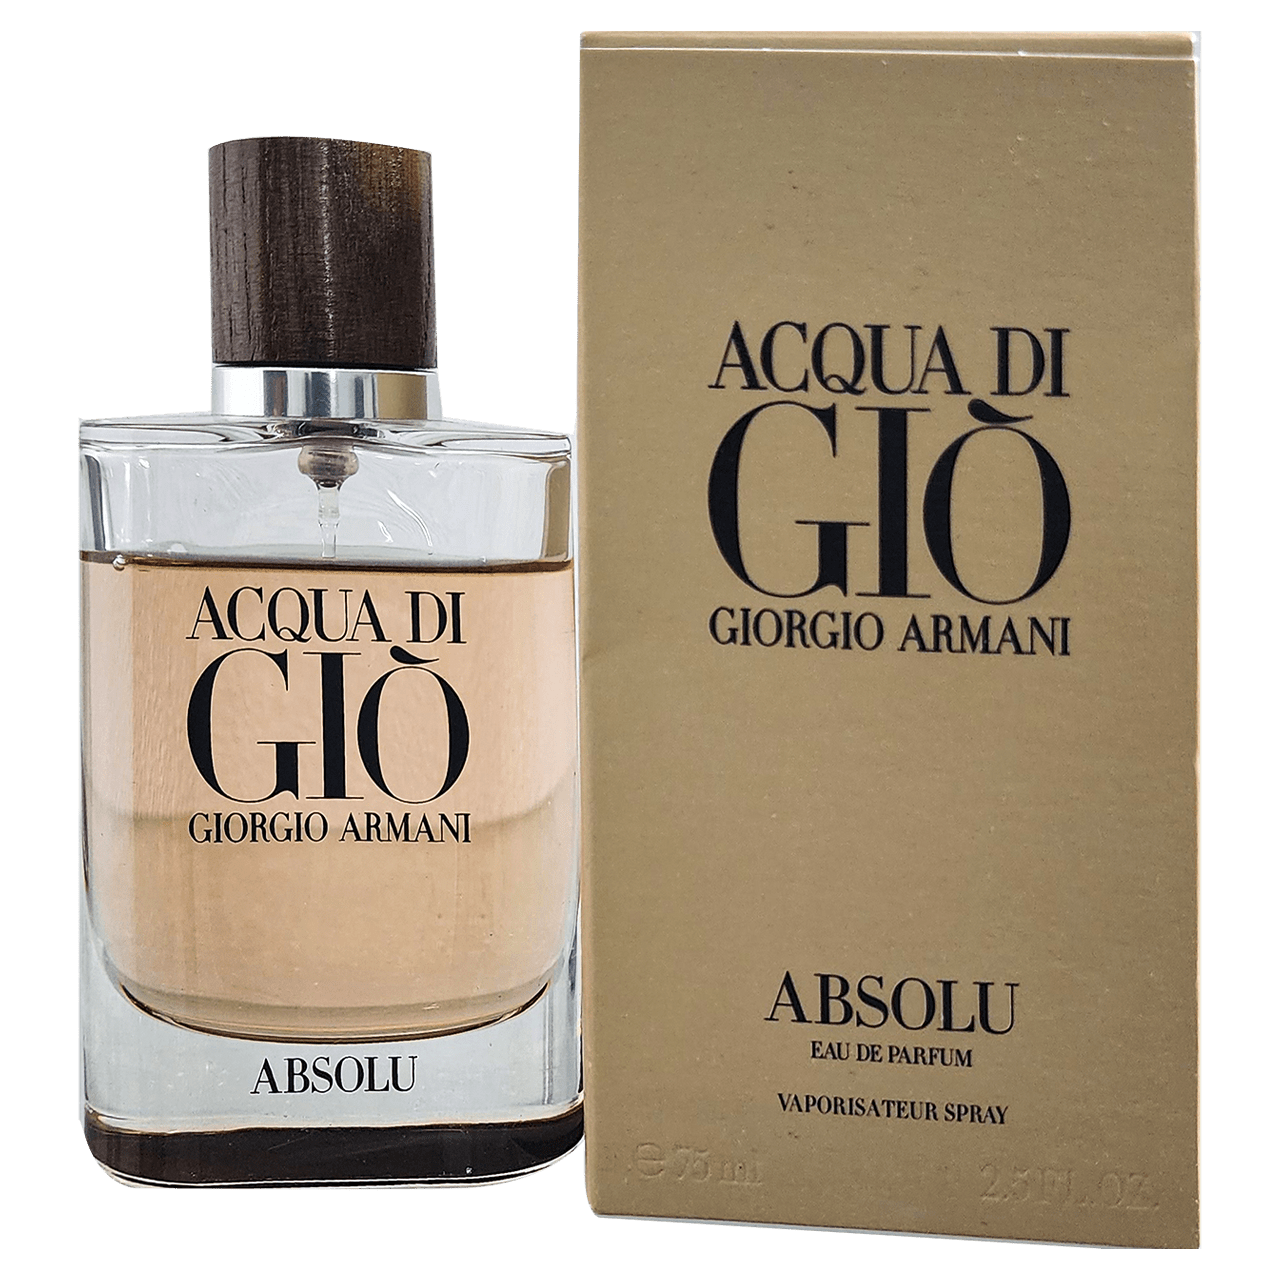 Acqua di gio Absolu - PerfumeSample.com